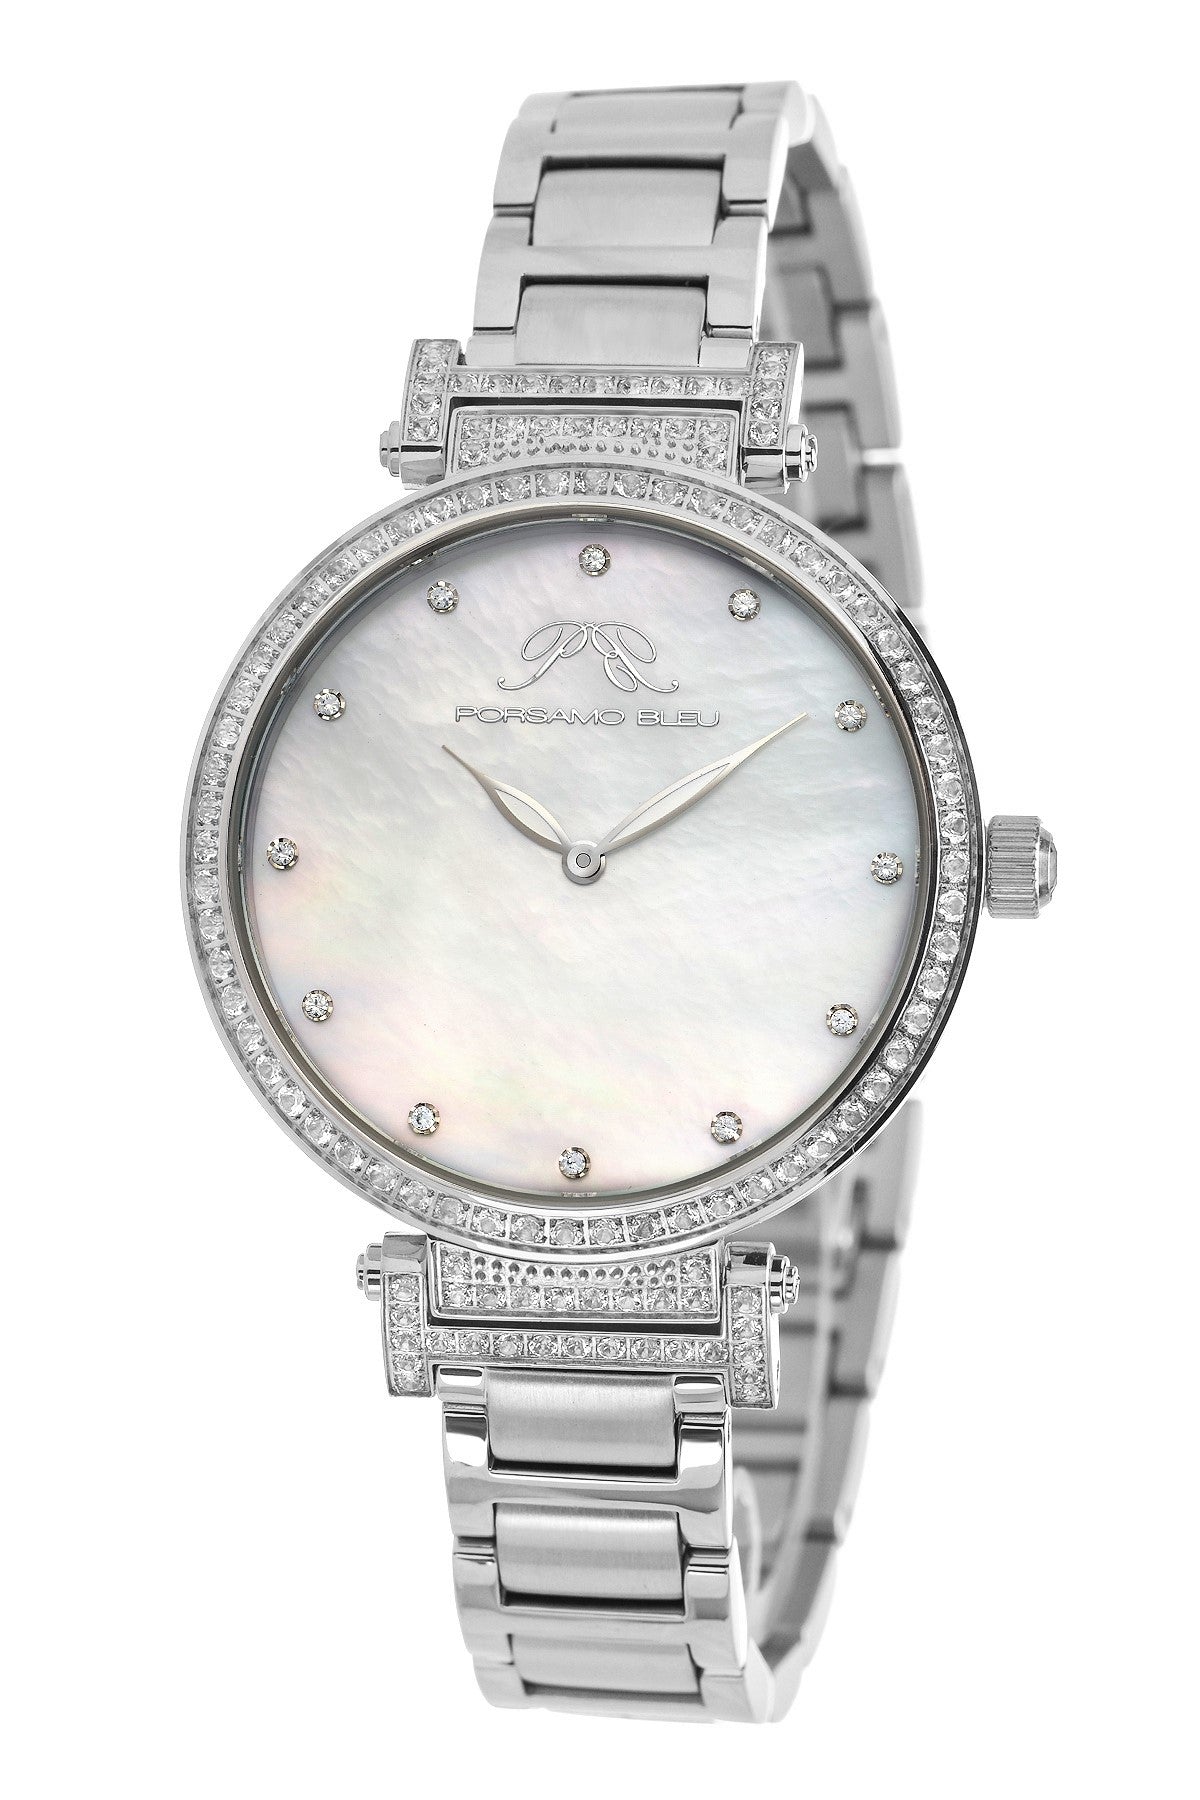 Porsamo Bleu Chantal Luxury Topaz Women's Stainless Steel Watch, Silver, White 671ACHS